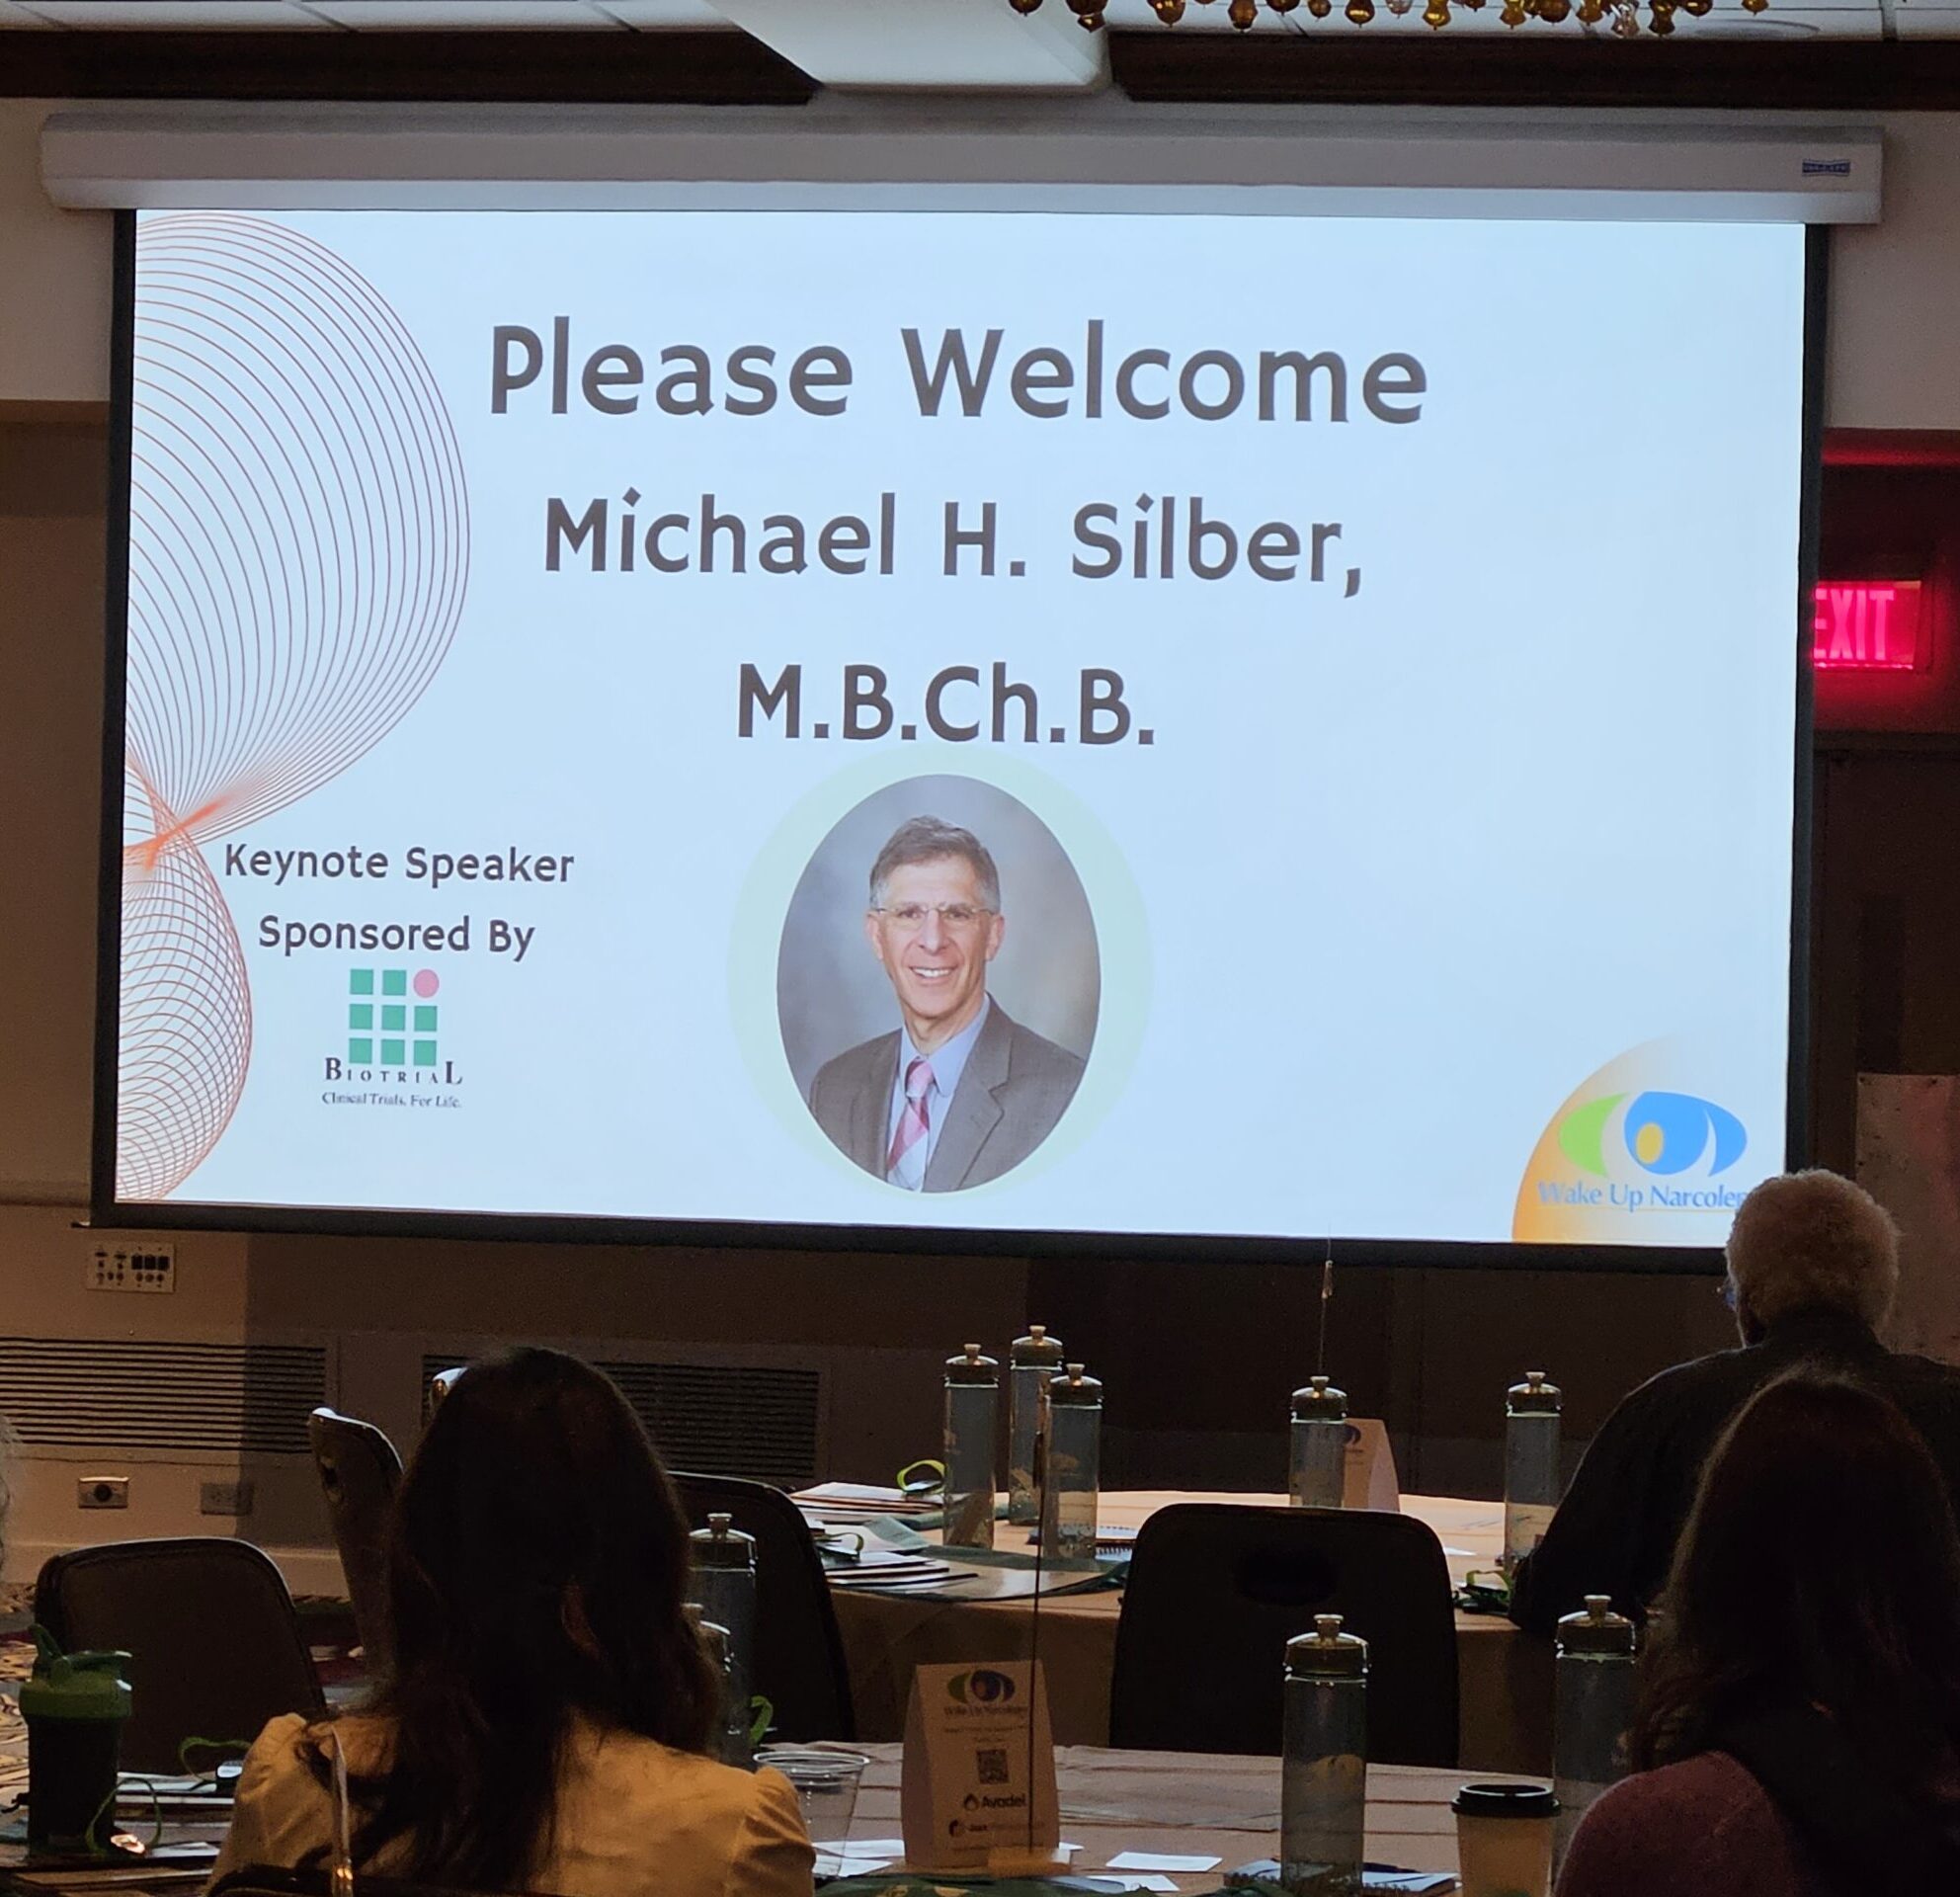 Please Welcome Michael H. Silber, M.B.Ch.B. - Keynote Speaker Sponsored by Biotrial - Wake Up Narcolepsy